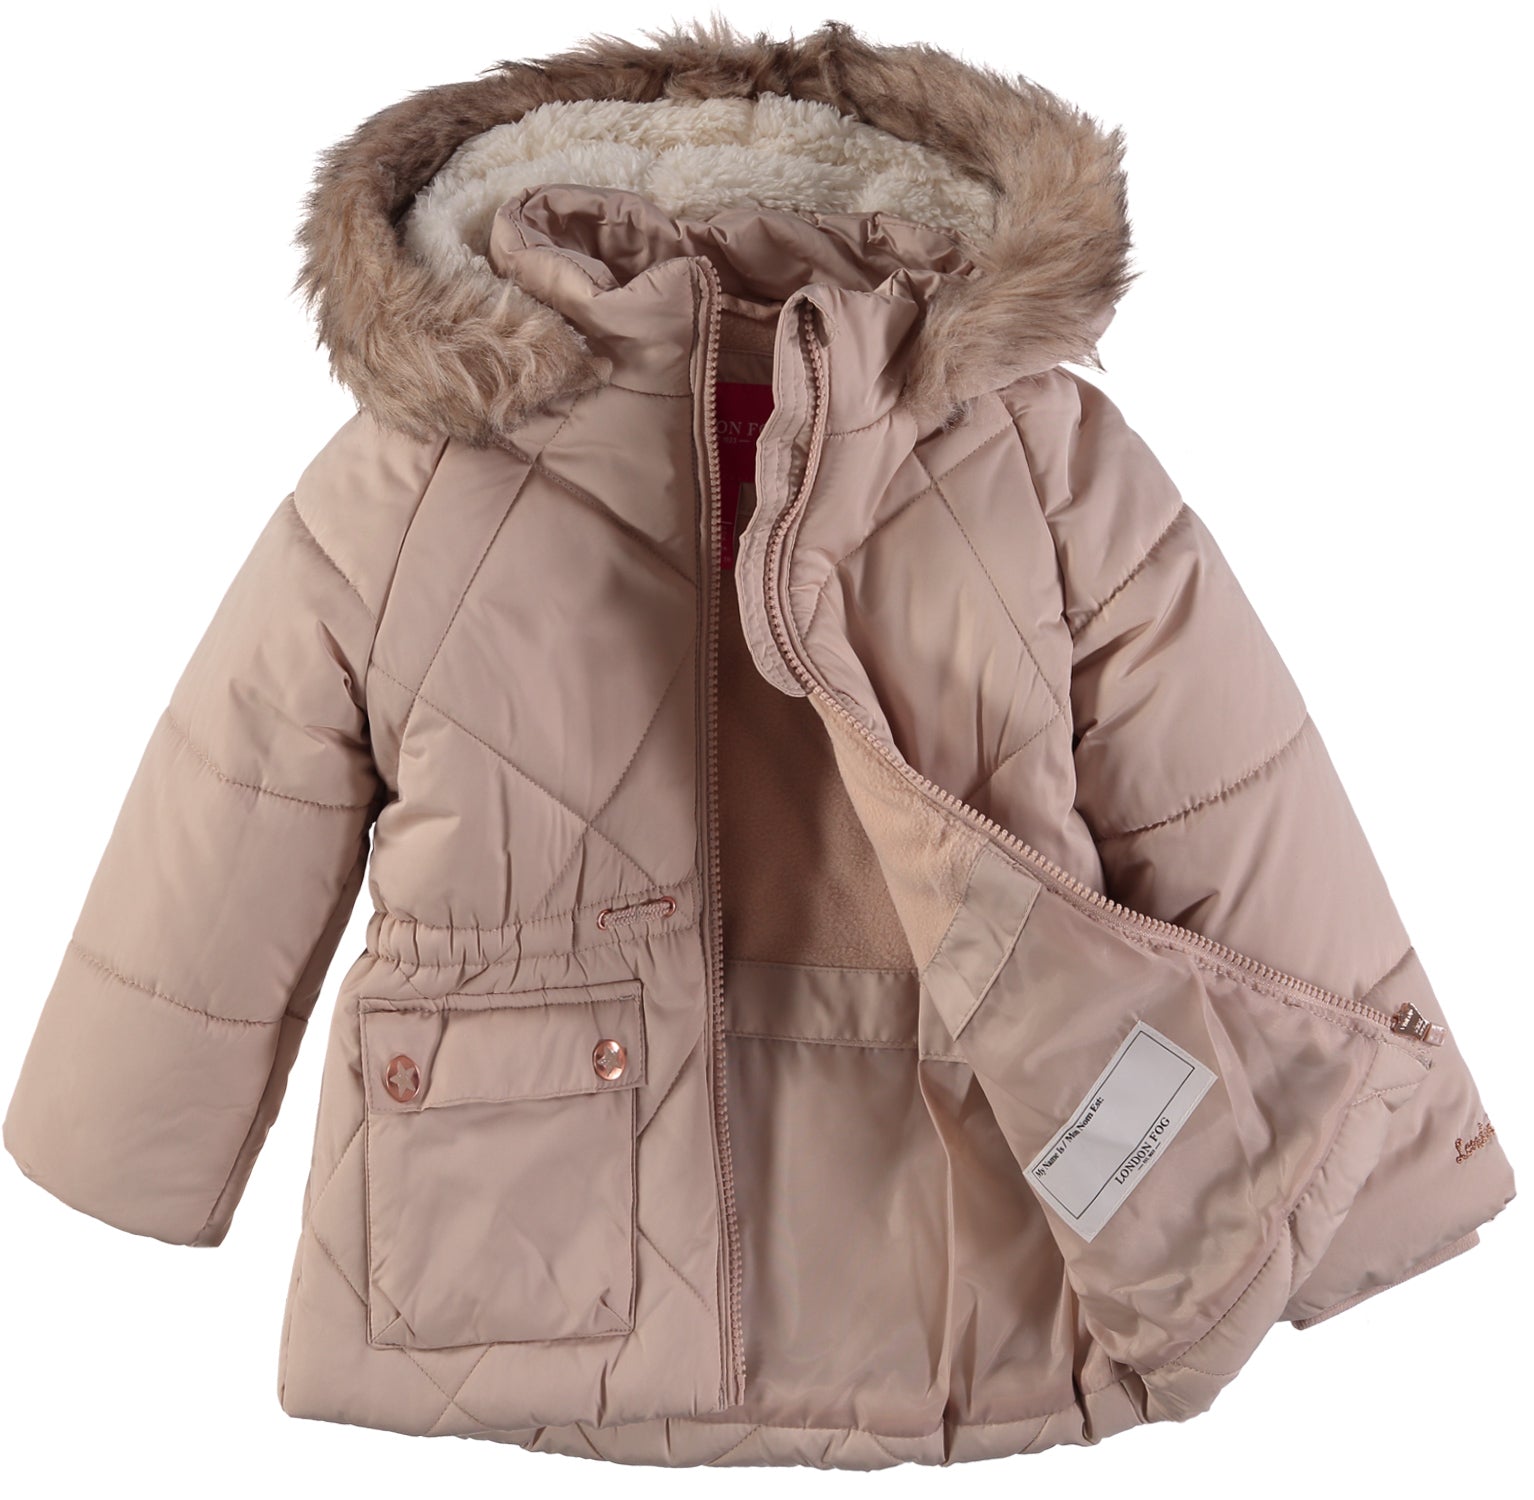 London Fog Girls 2T-4T Quilt Fur Hood Jacket